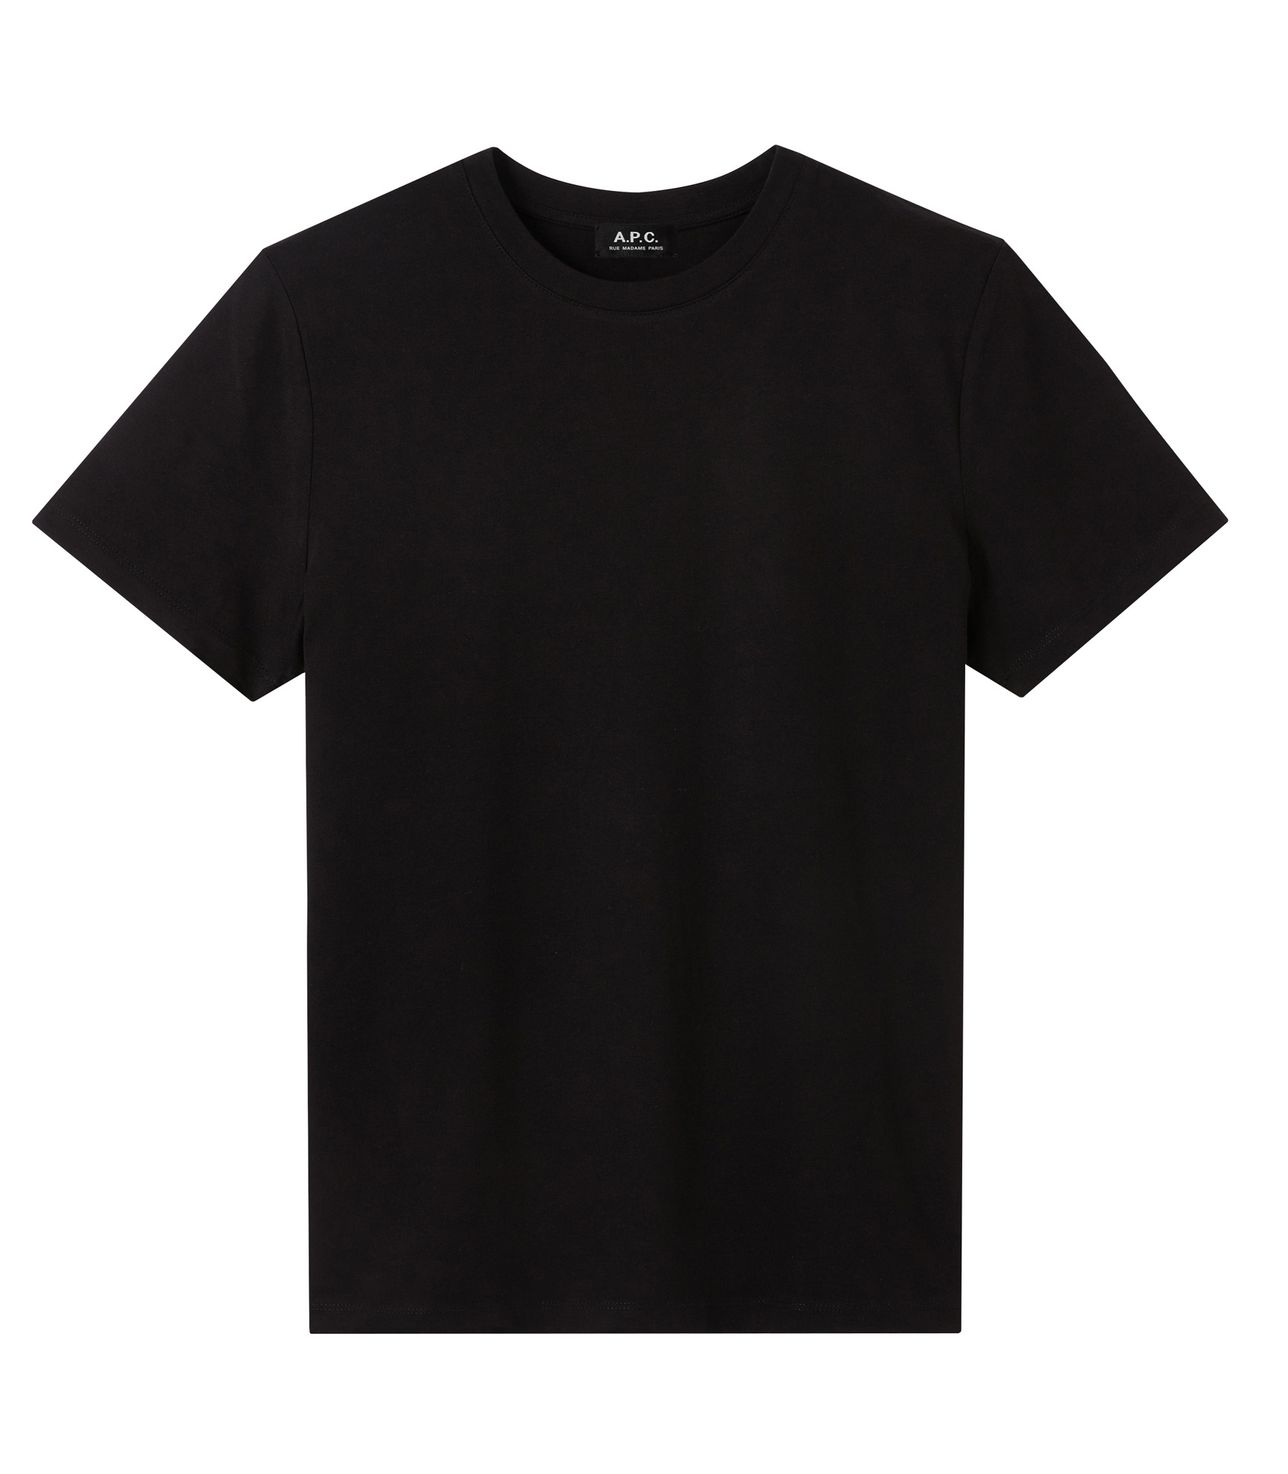 Jimmy T-shirt BLACK APC